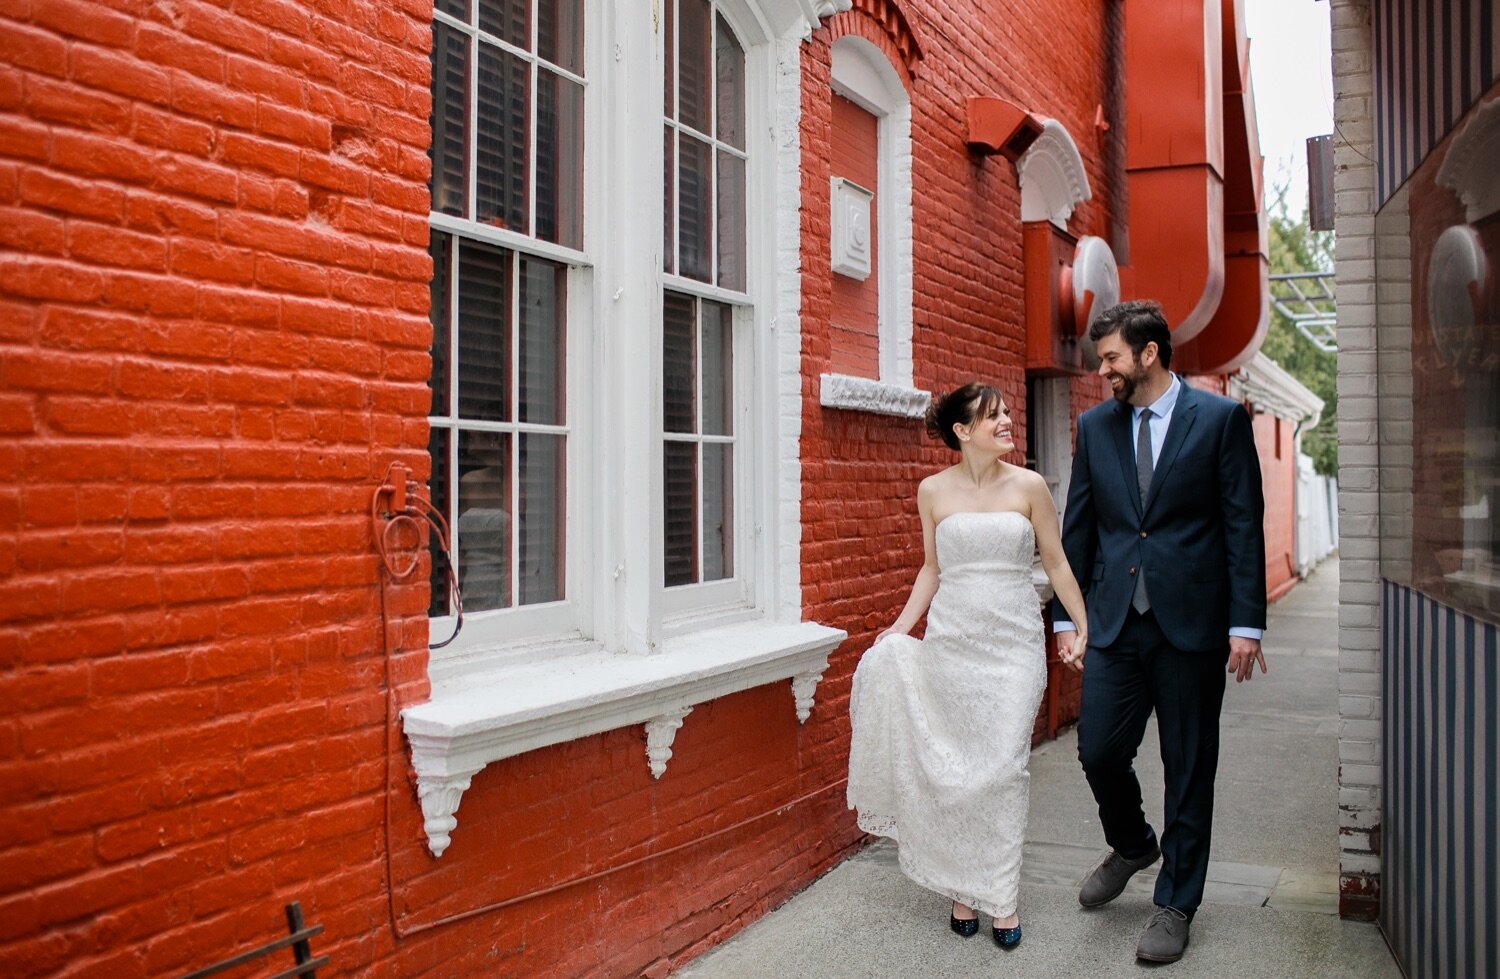 15_Bride and groom photos in Rhinebeck NY.jpg